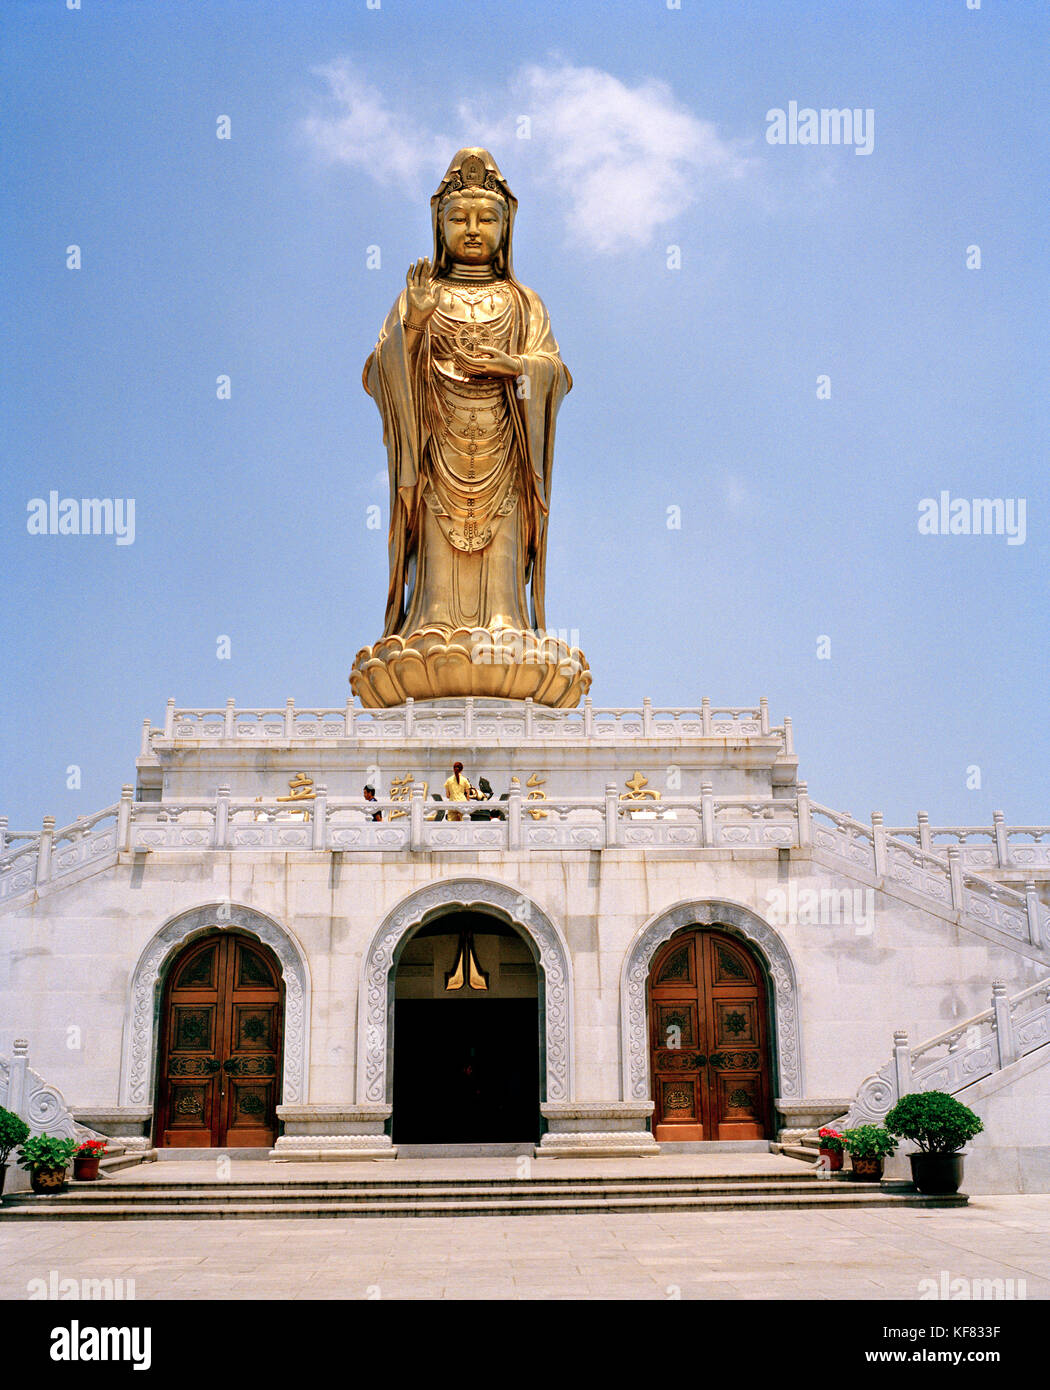 China, putou Shan, Leute tour quanyin Tempel auf der Insel putou Shan Stockfoto